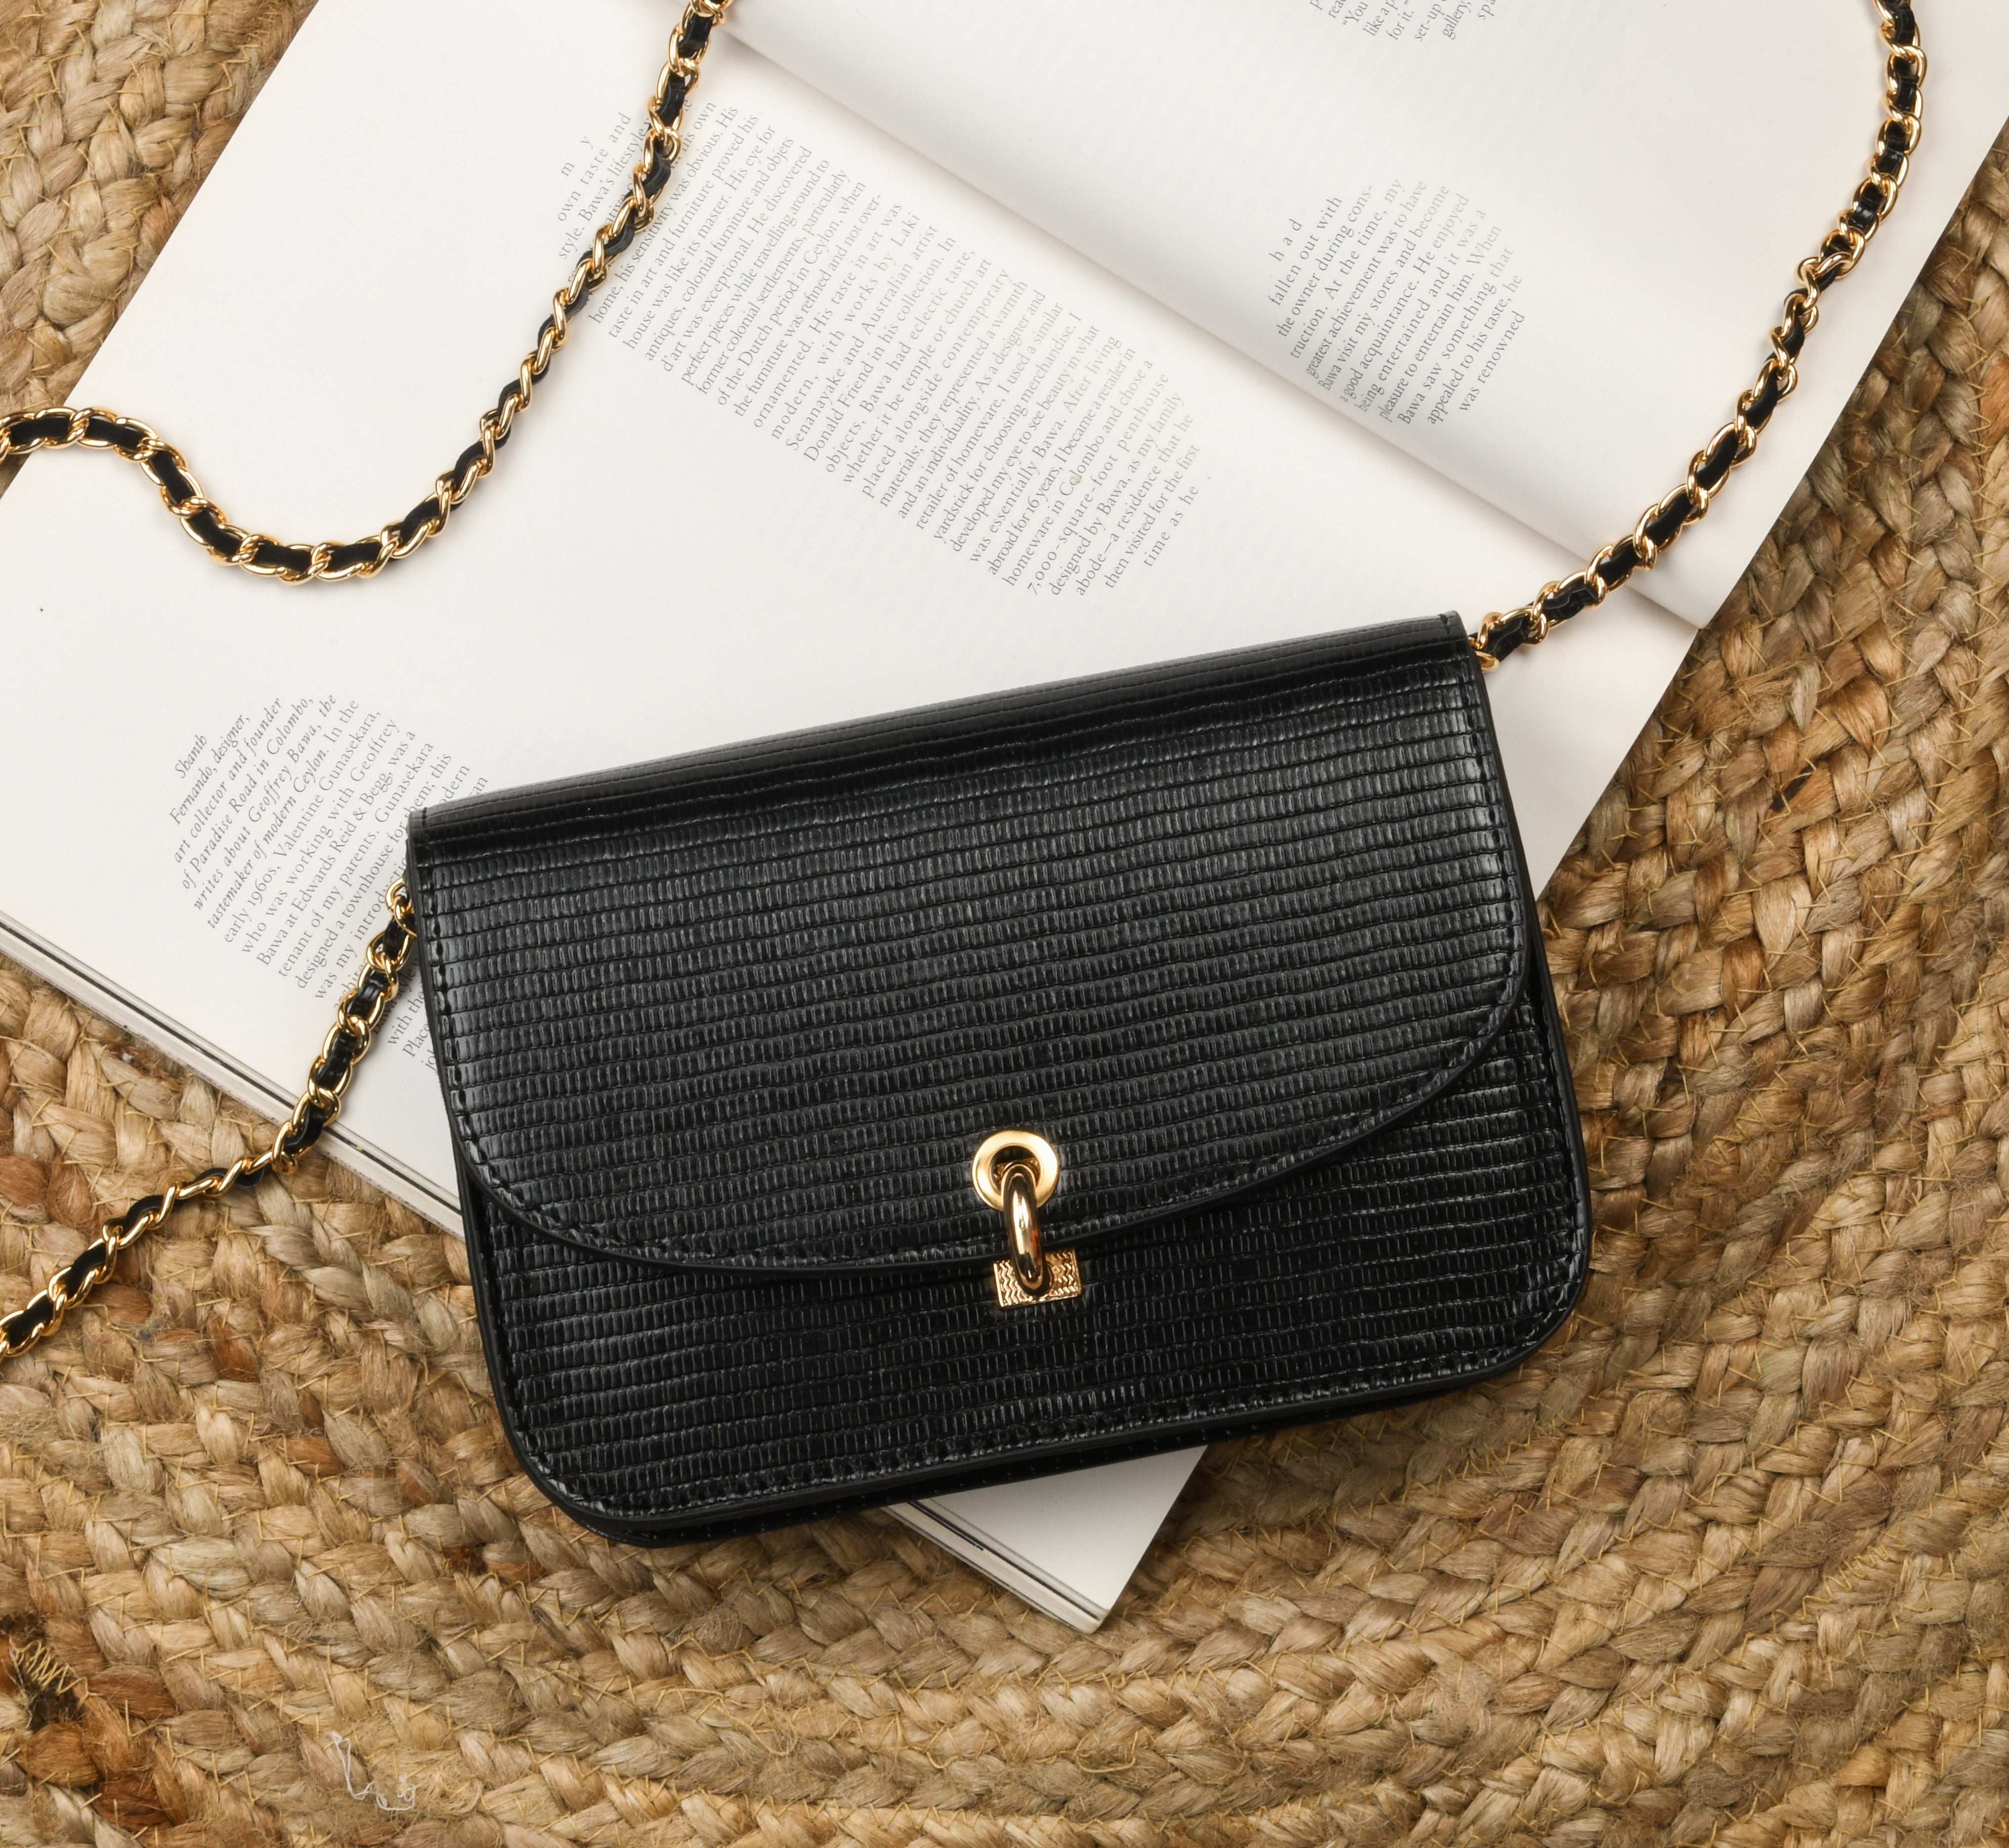 Accessorize London women's Faux Leather Black Mini Purse Sling Bag